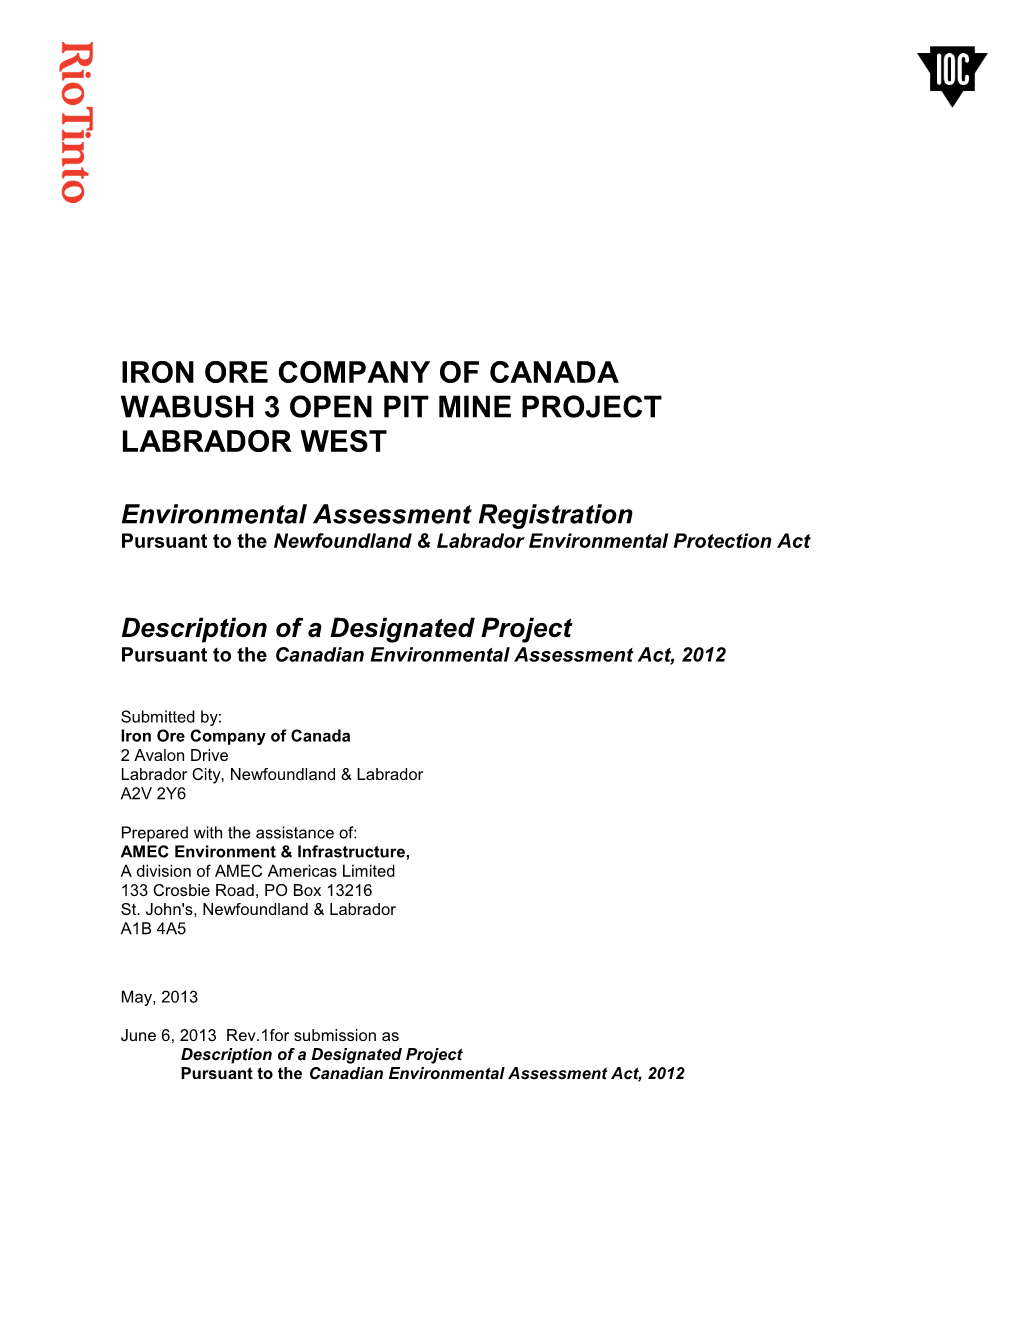 Iron Ore Company of Canada Wabush 3 Open Pit Mine Project Labrador West